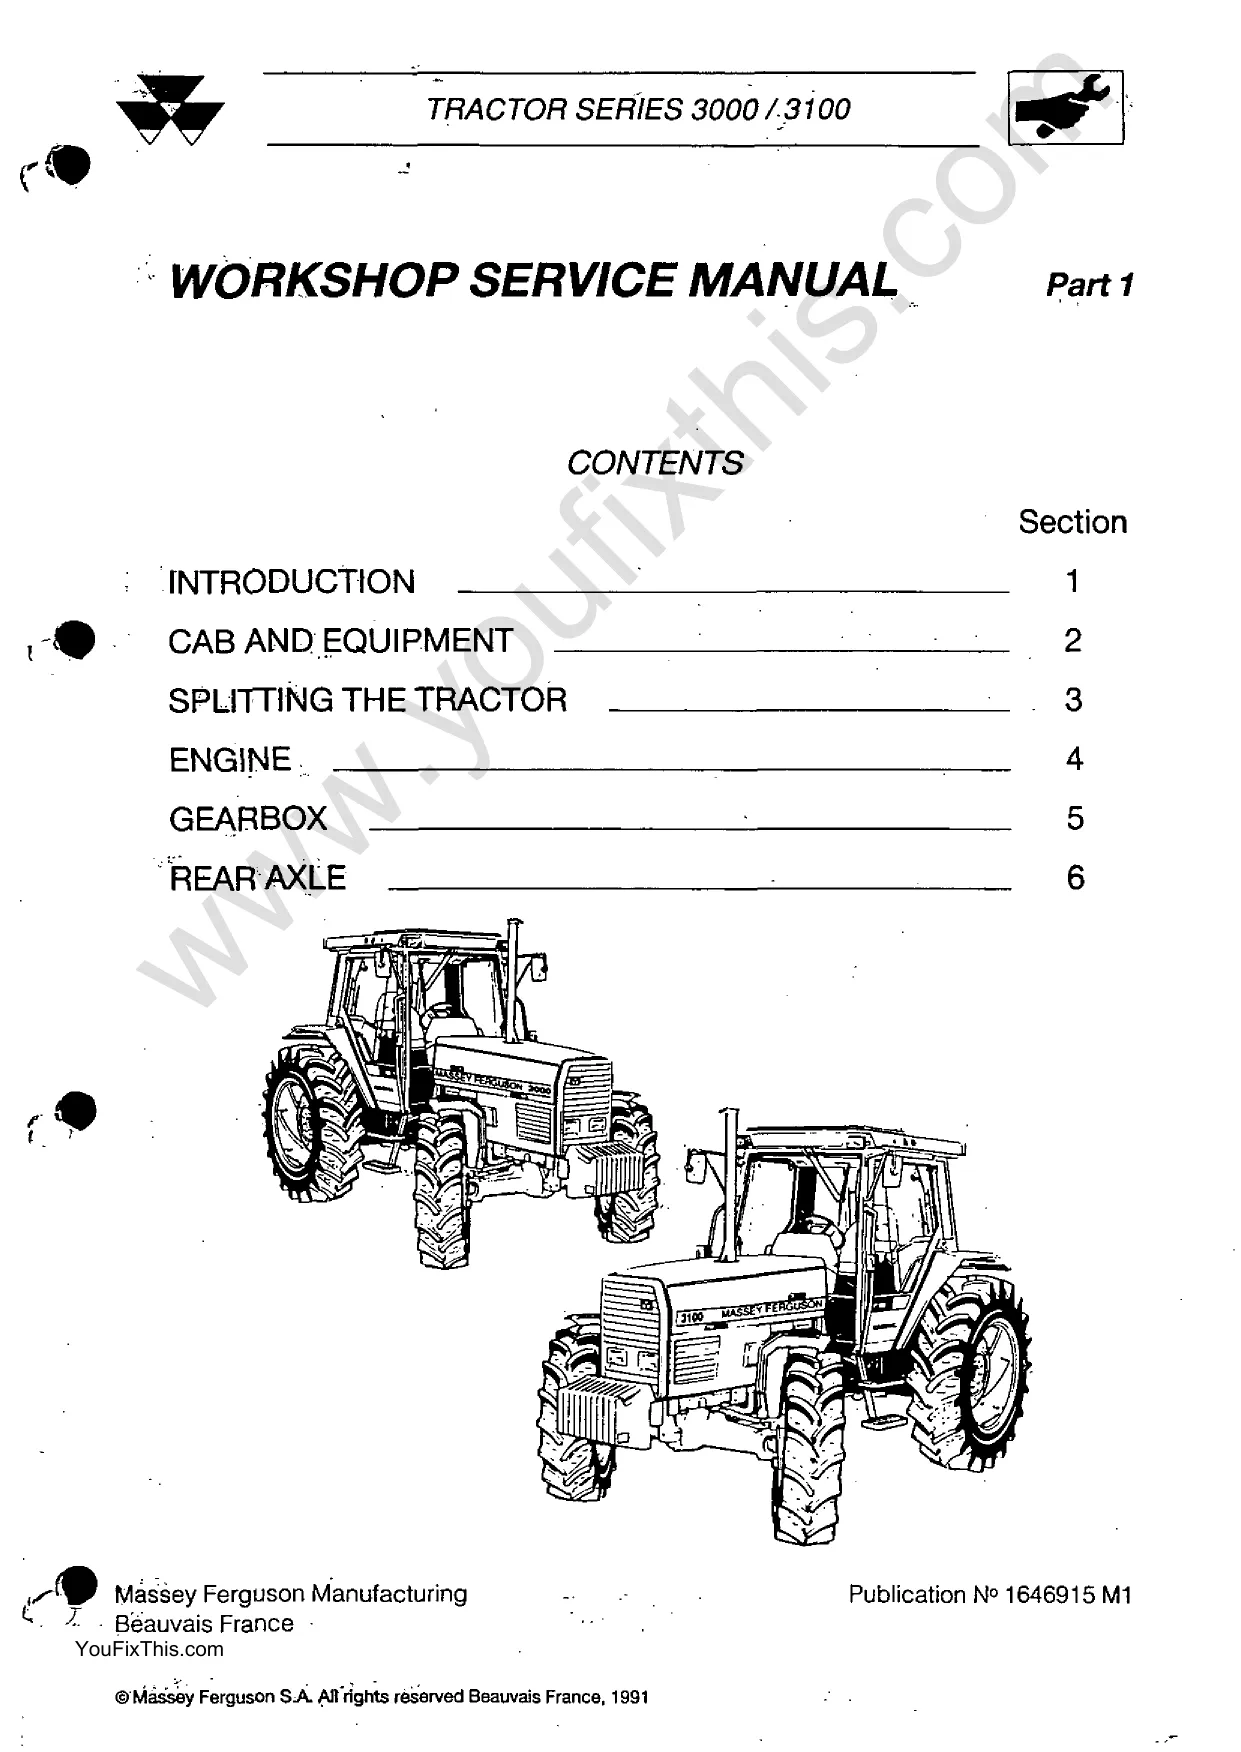 Massey Ferguson 3050, 3060, 3065, 3070, 3080, 3095, 3100, 3115, 3120, 3125, 3140 Row-Crop tractor repair manual